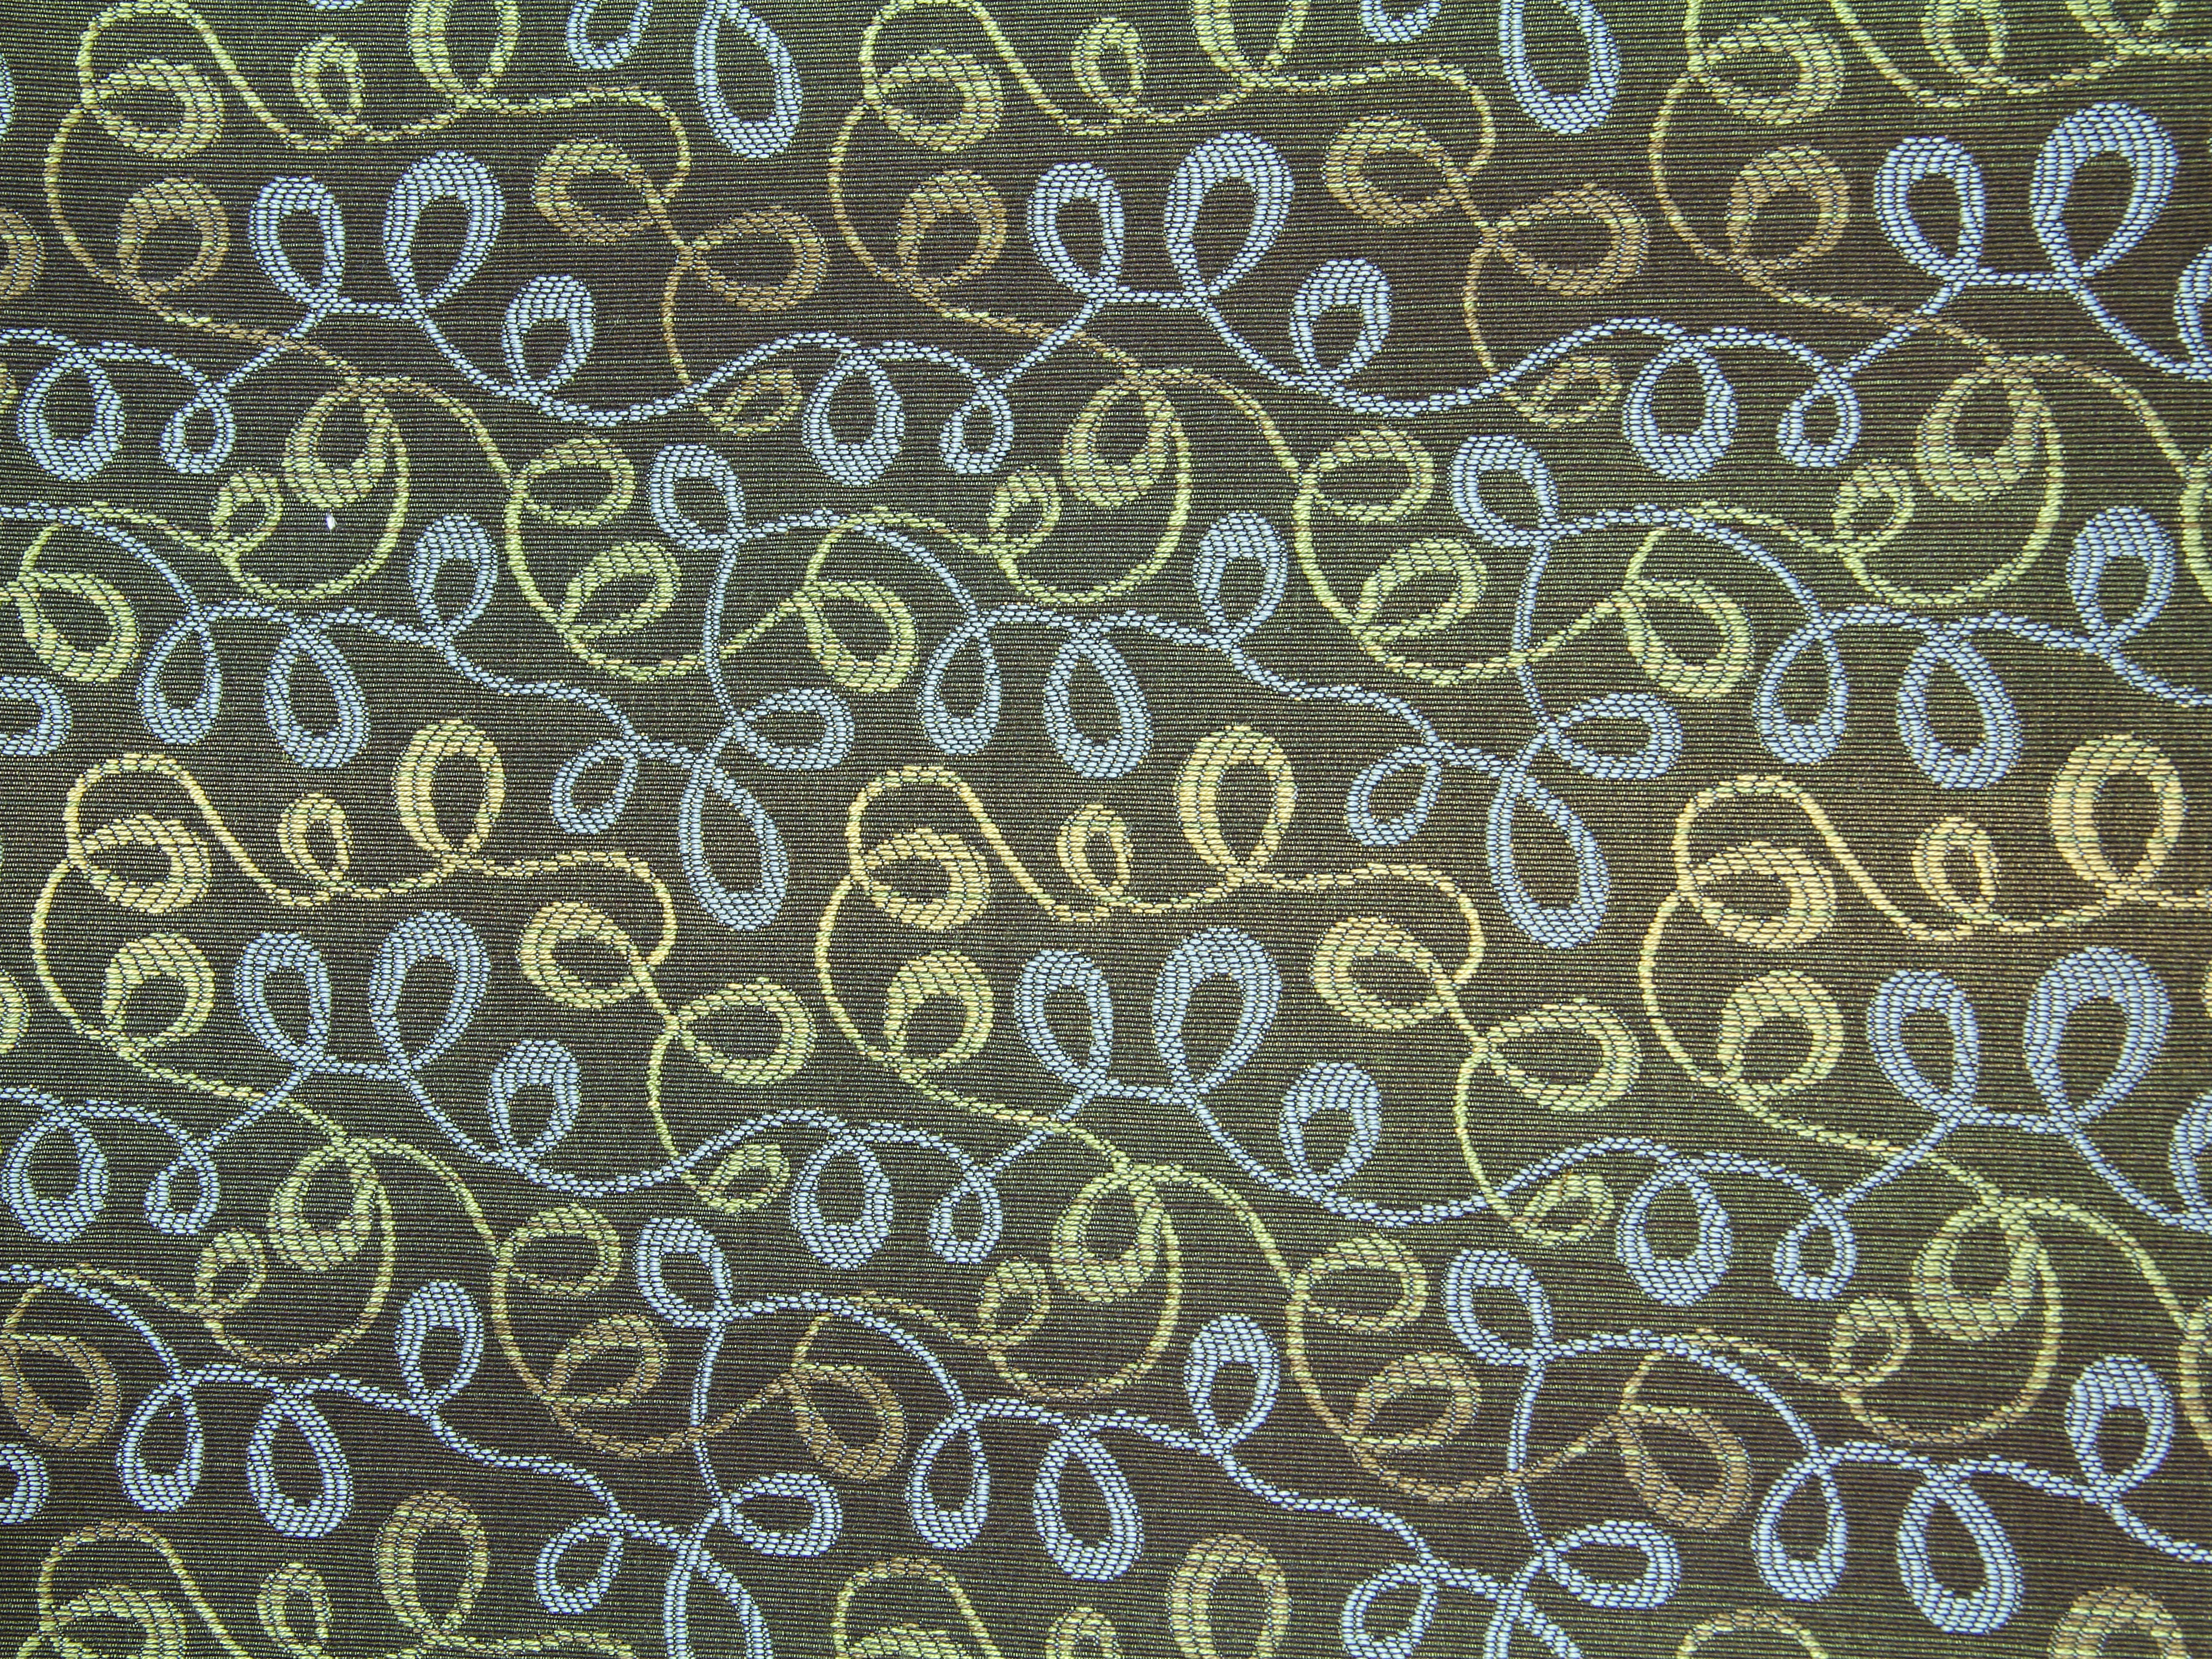 Fabric Texture Retro Swirls 70s Brown Desktop Wallpaper Cloth Design